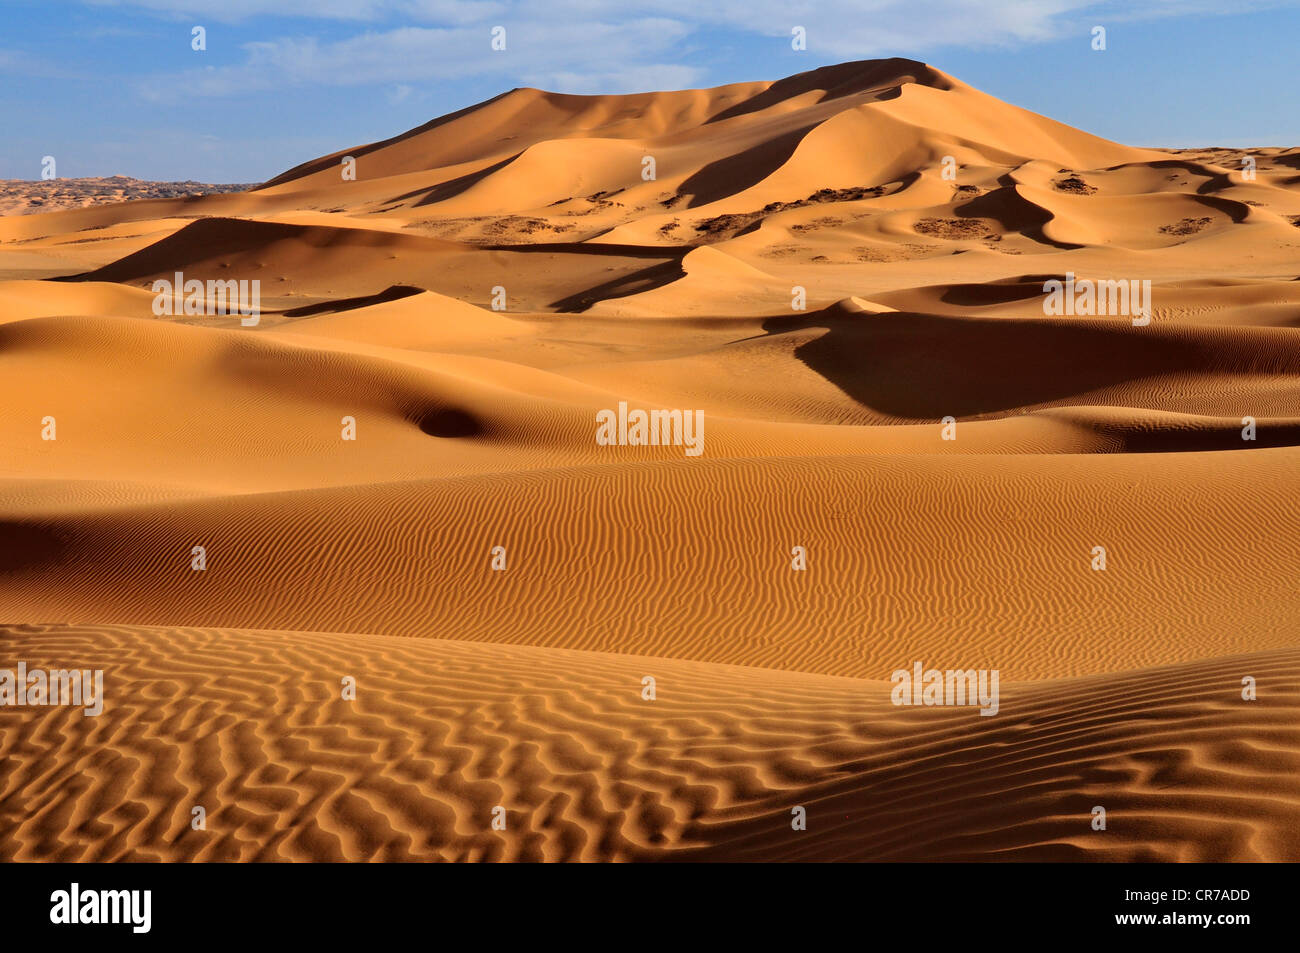 Algeria, Sahara, View of sand dunes Stock Photo